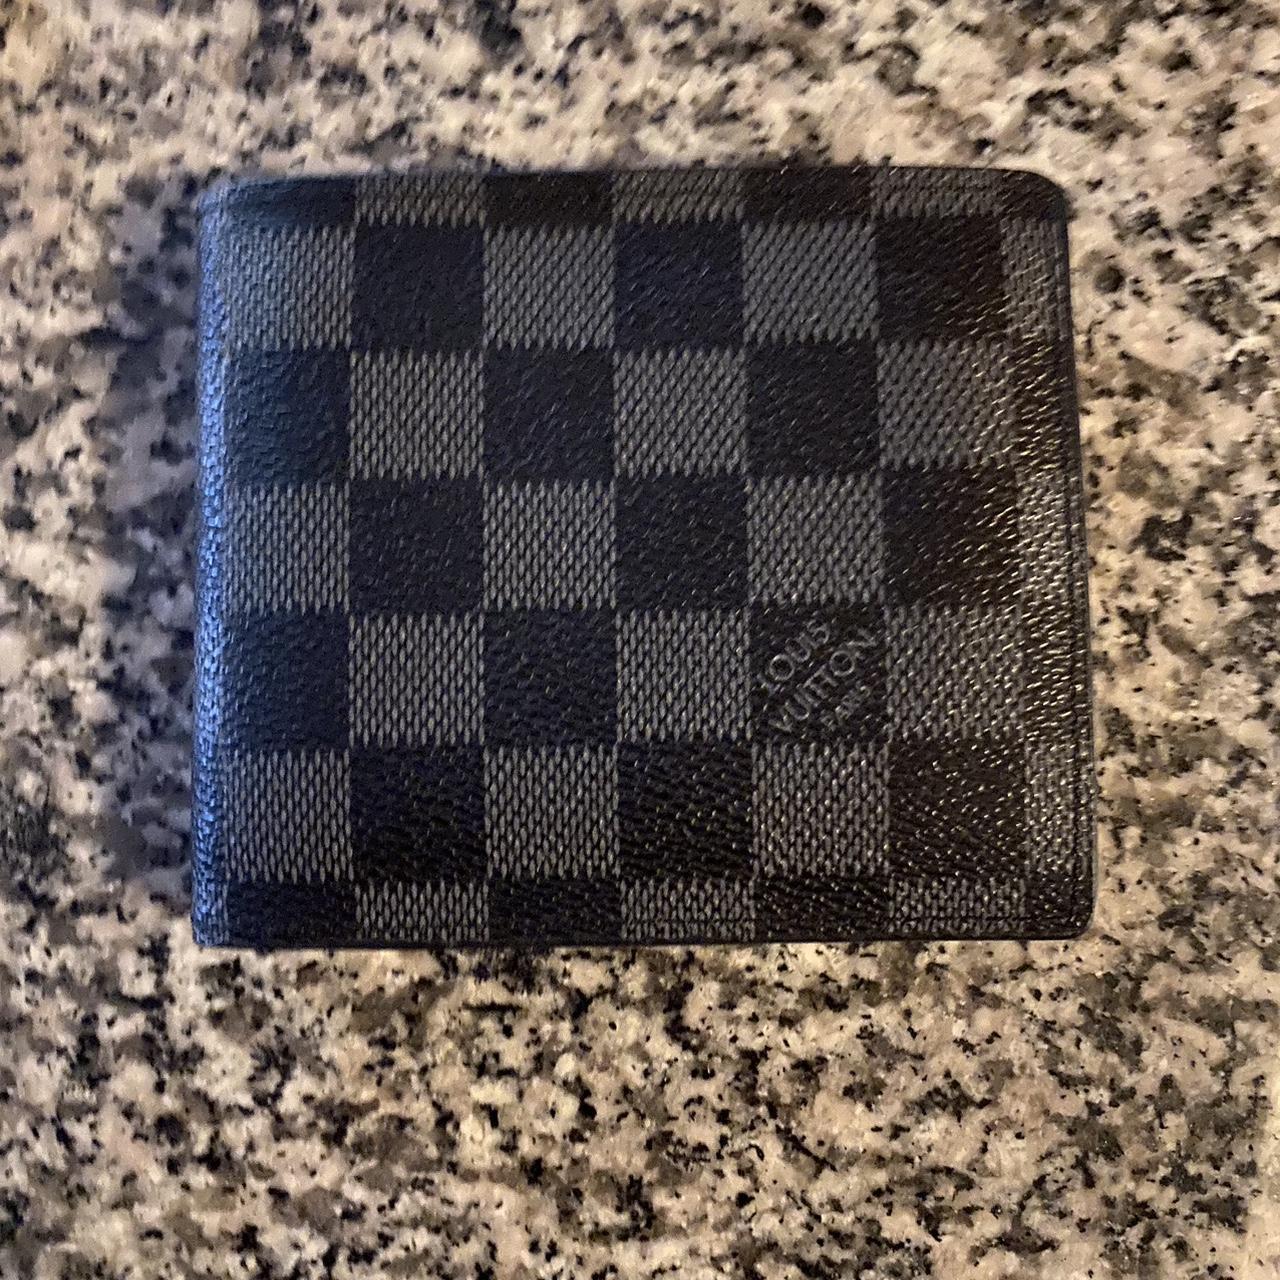 Black Used Louis Vuitton Wallet - Depop